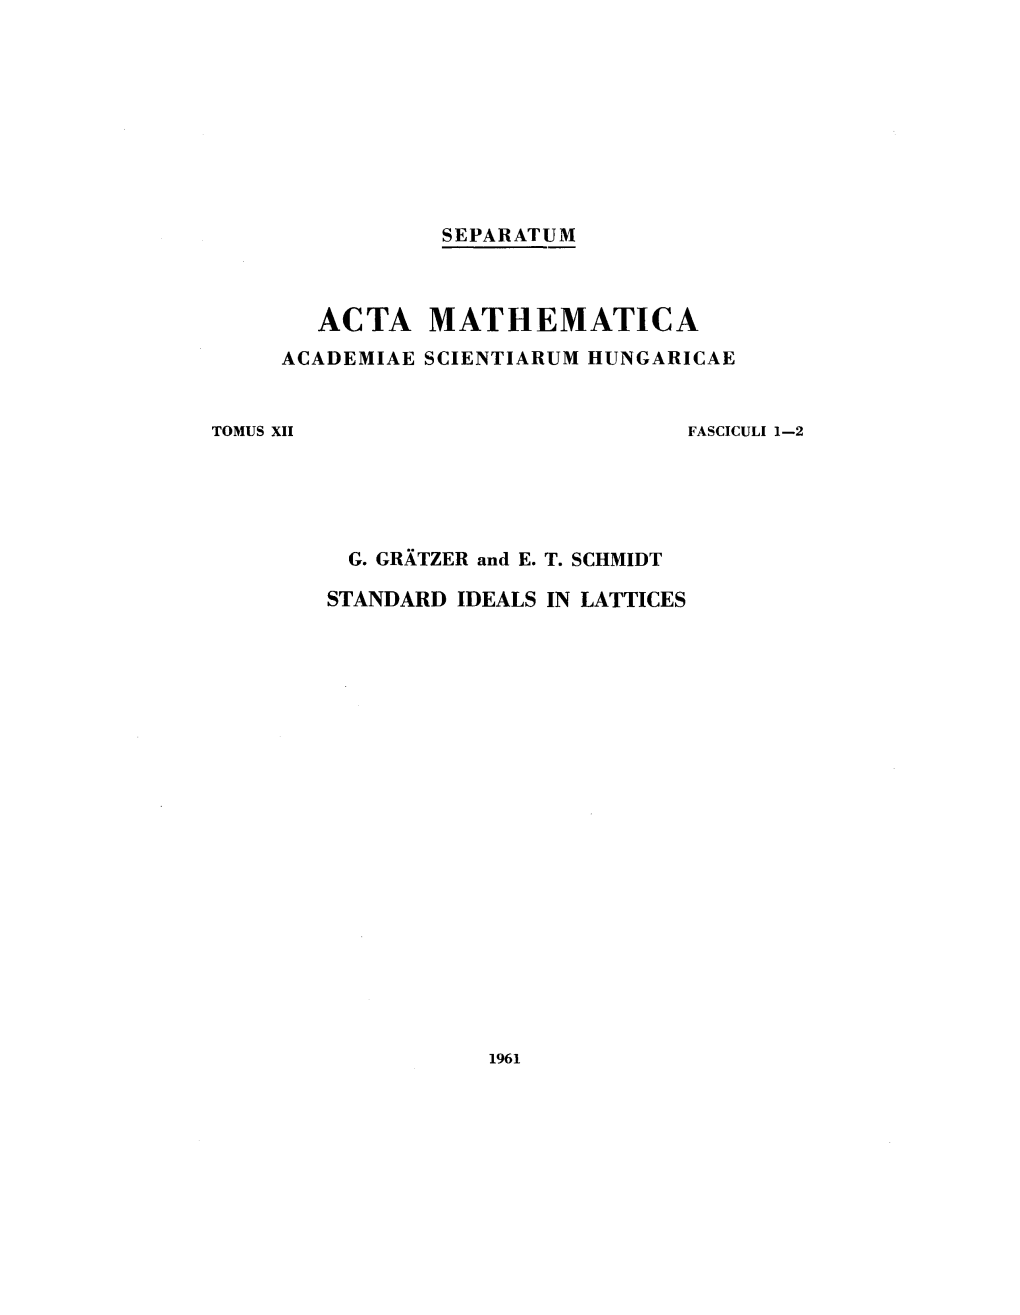 G. Grätzer and E. T. Schmidt, Standard Ideals in Lattices, Acta